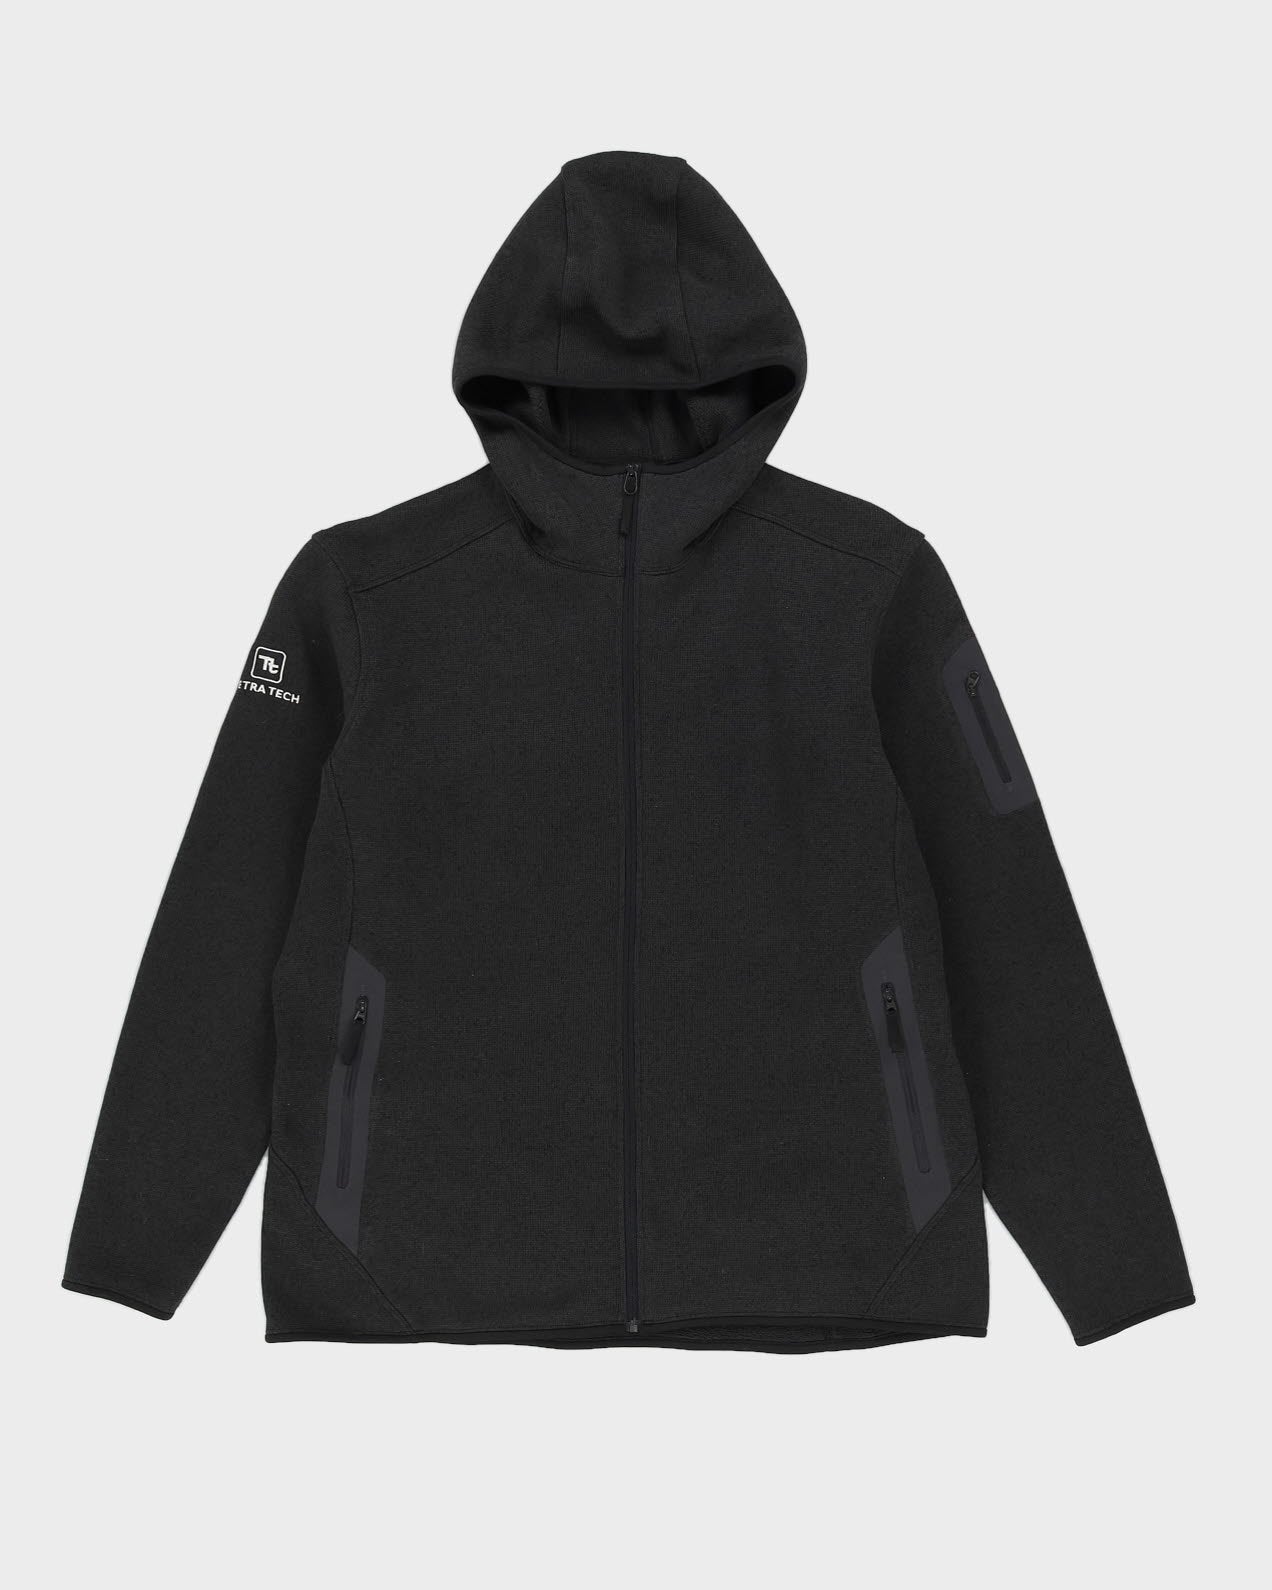 Arc'teryx Black Full-Zip Hooded Fleece - XL